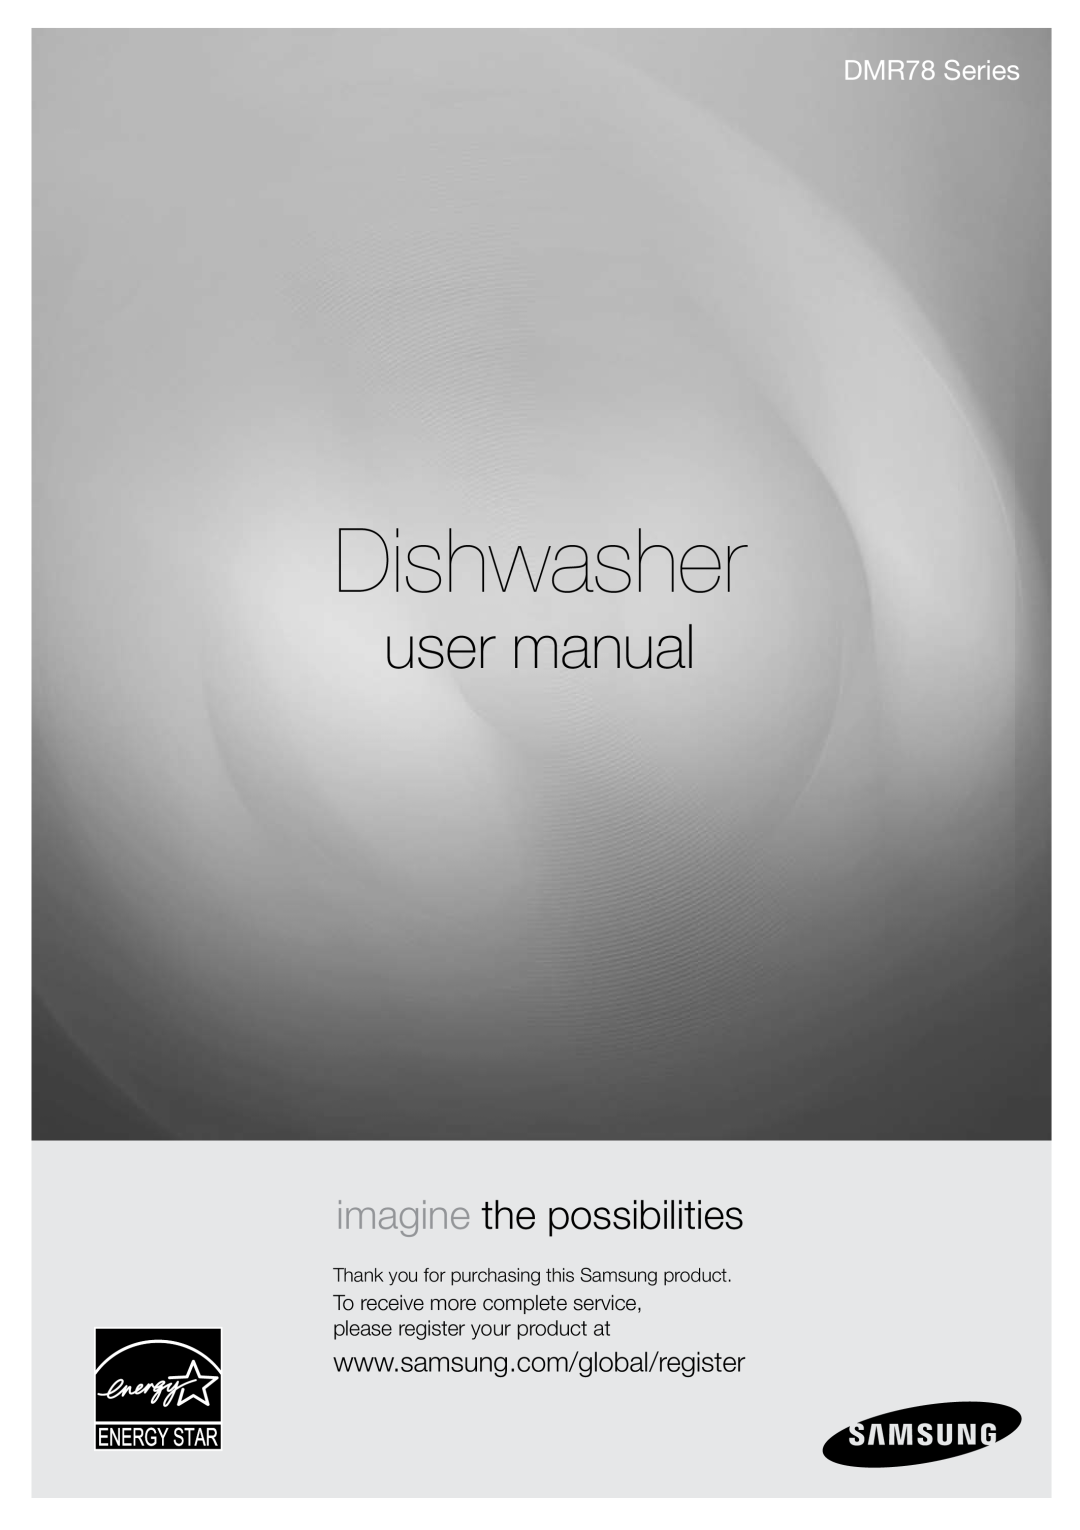 Samsung manual Dishwasher, imagine the possibilities, DMR78 Series 